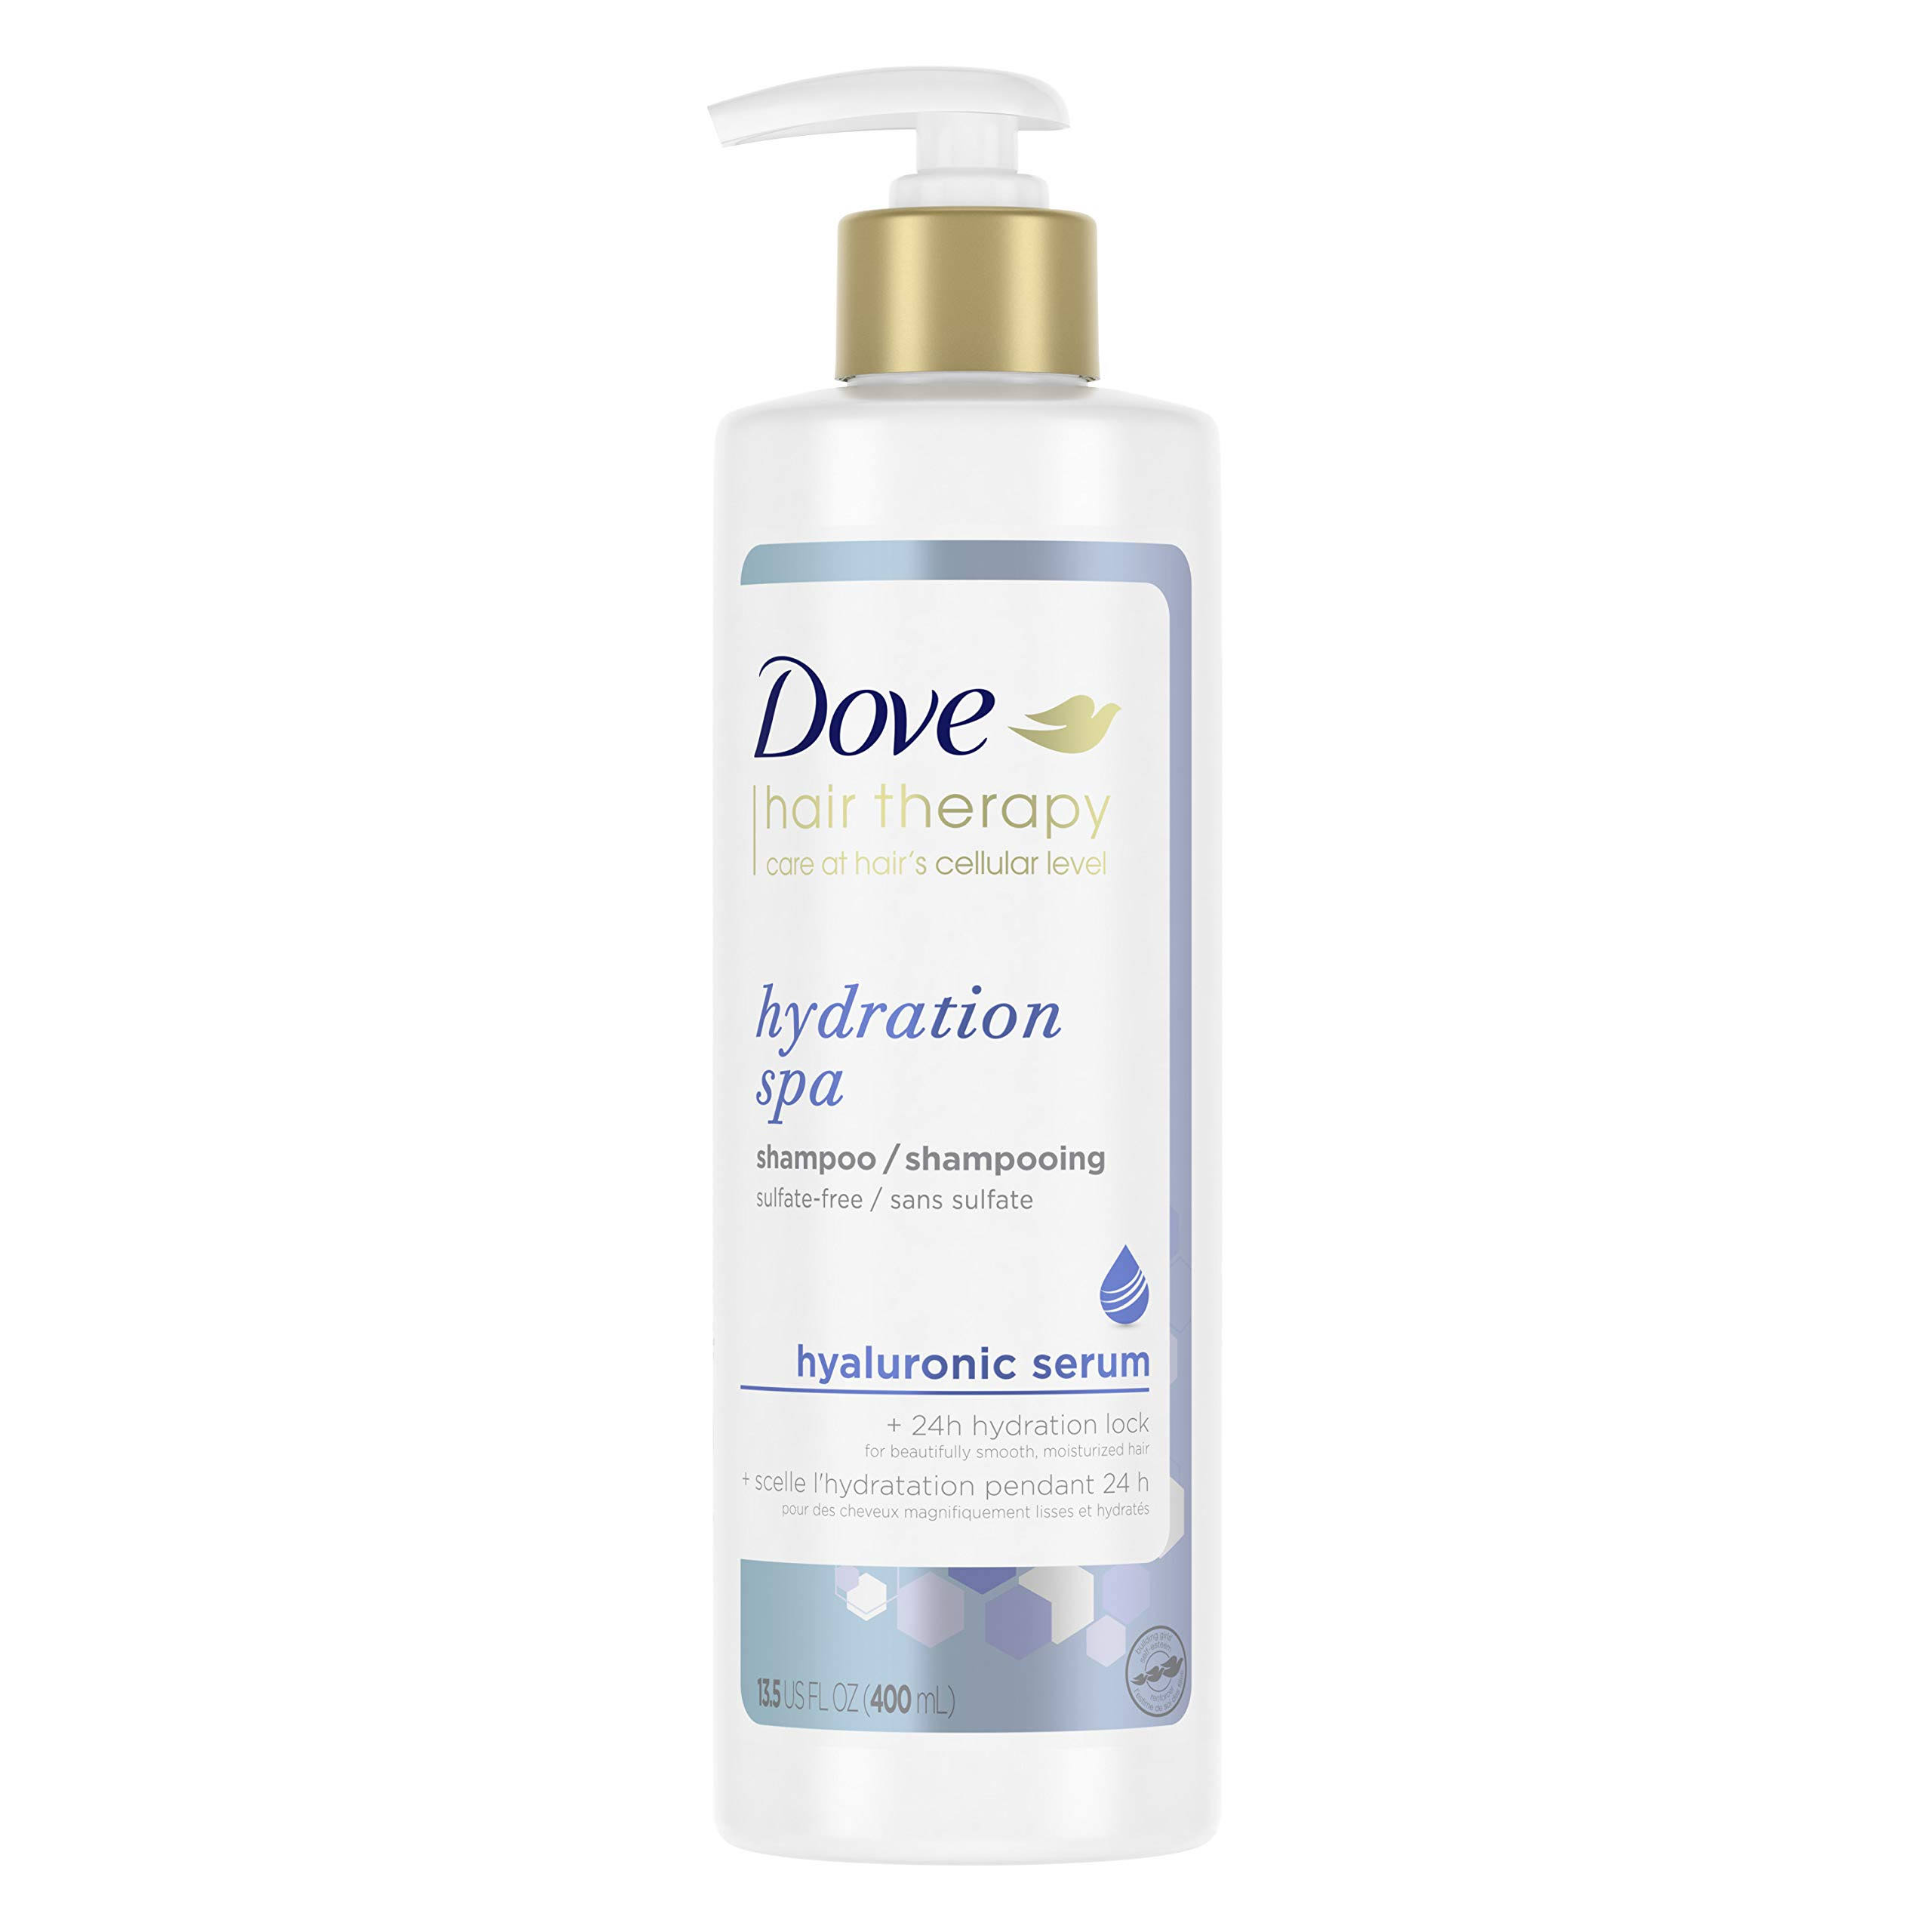 Dove Hair Therapy Hydration Spa Shampoo 13.5 fl oz